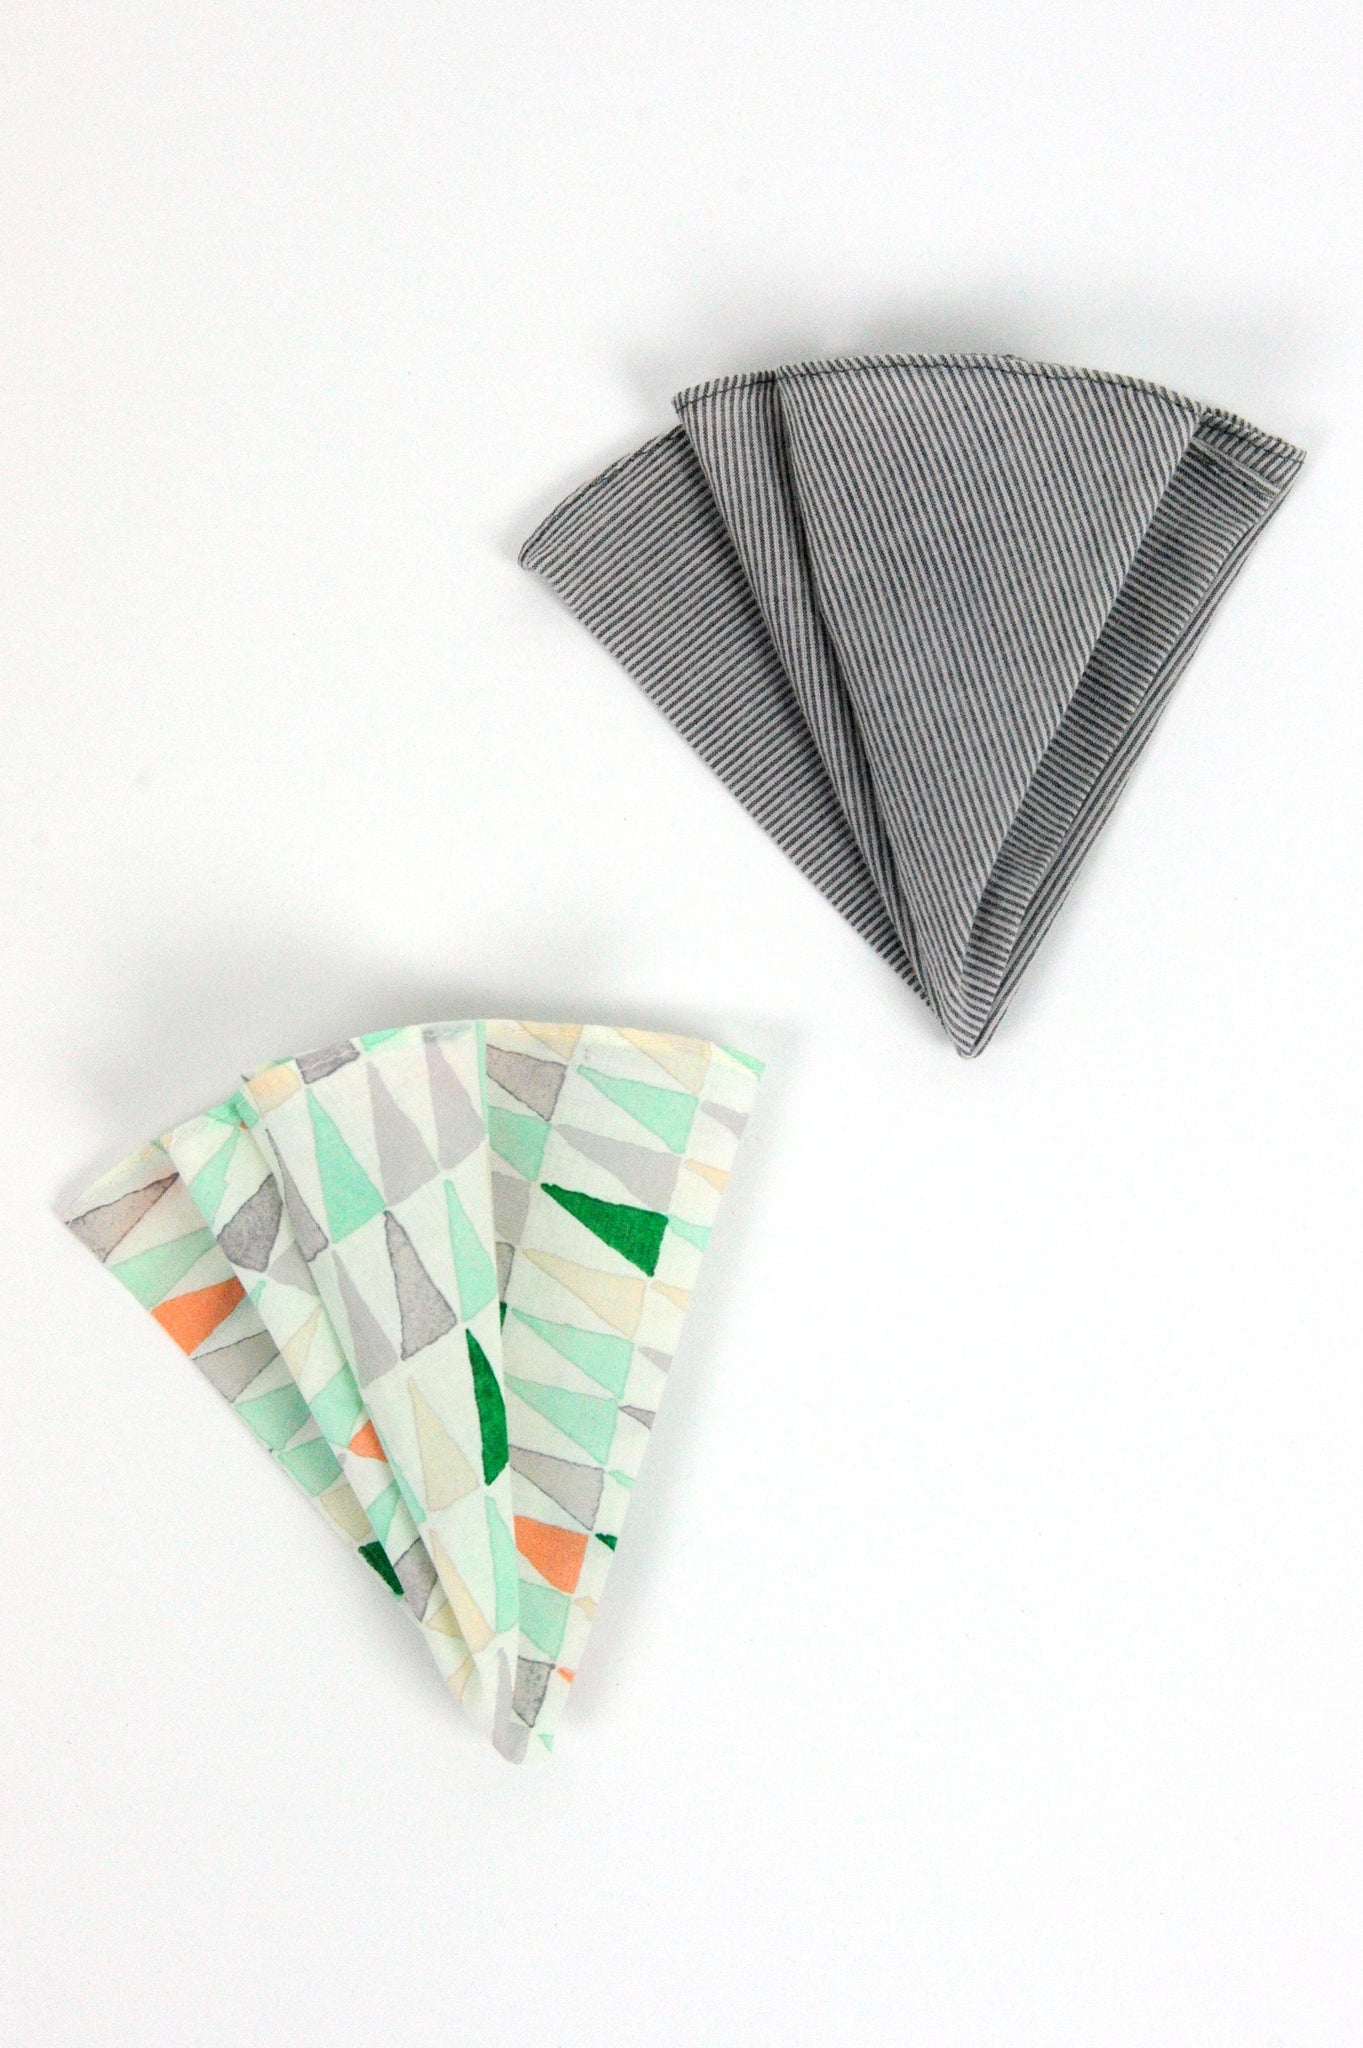 Pocket Rounds (set of 2) - triangle/stripe